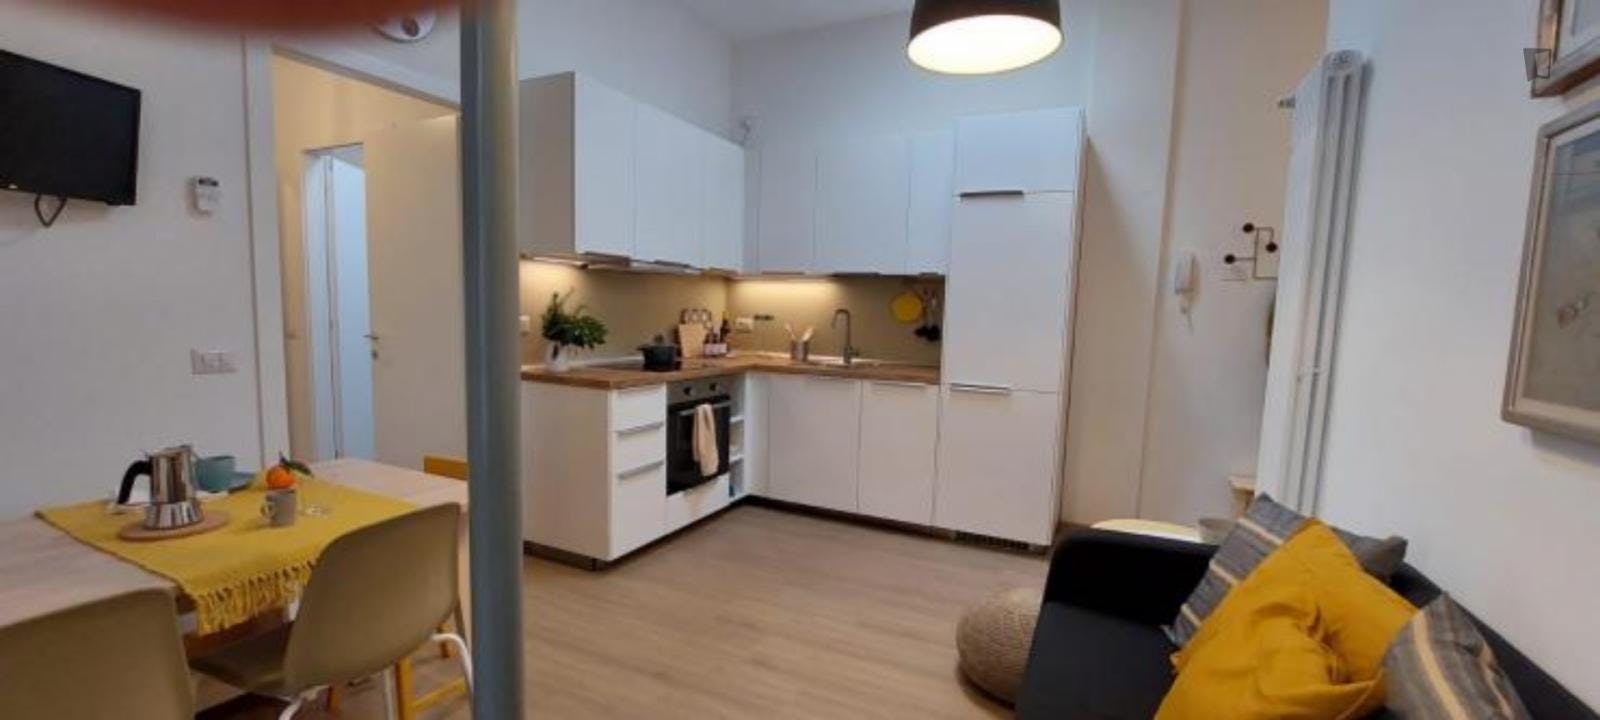 Appealing 2-bedroom apartment near Gambara metro station